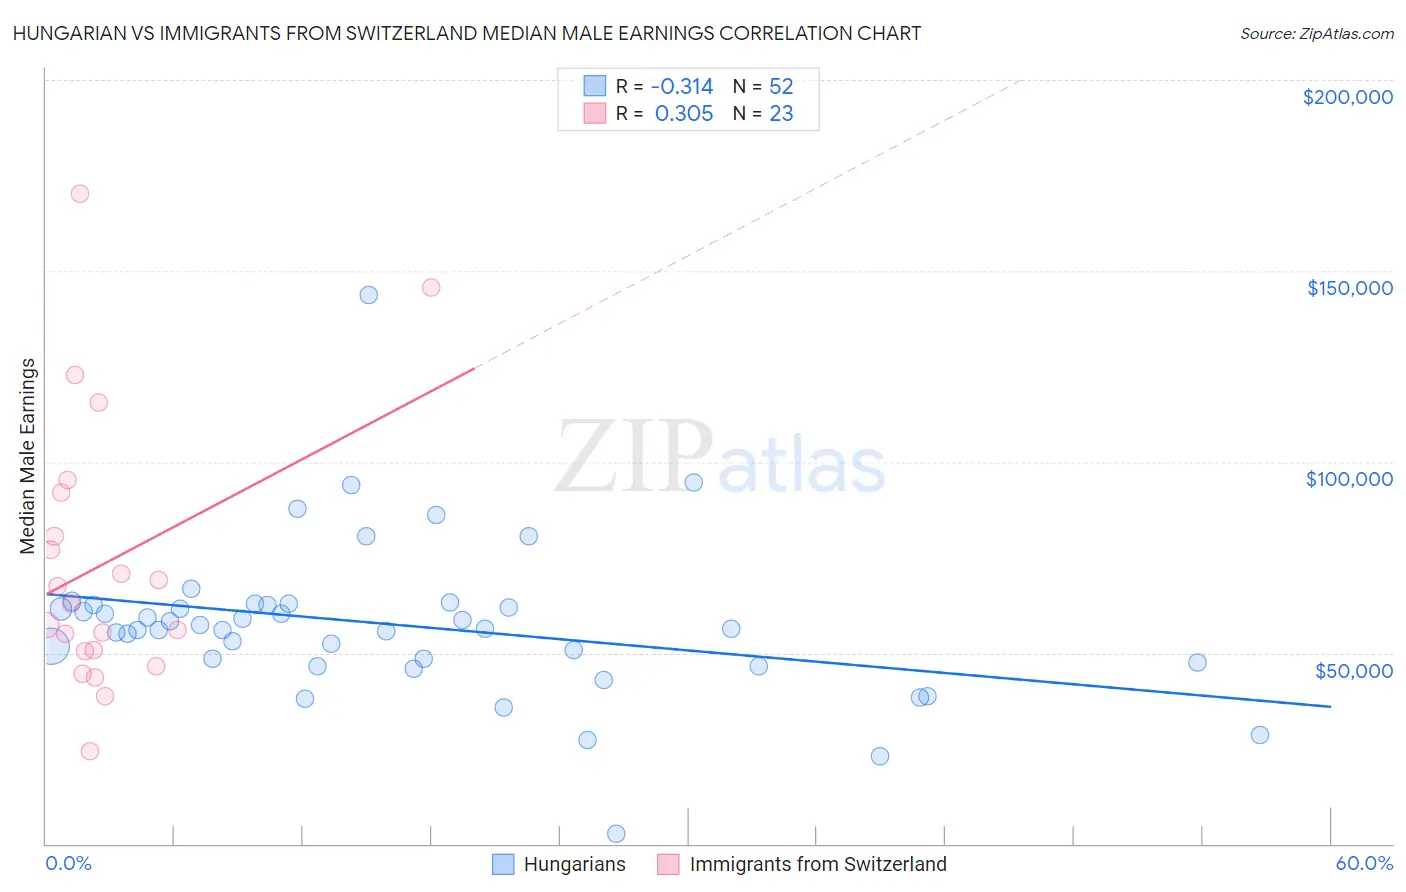 Hungarian vs Immigrants from Switzerland Median Male Earnings